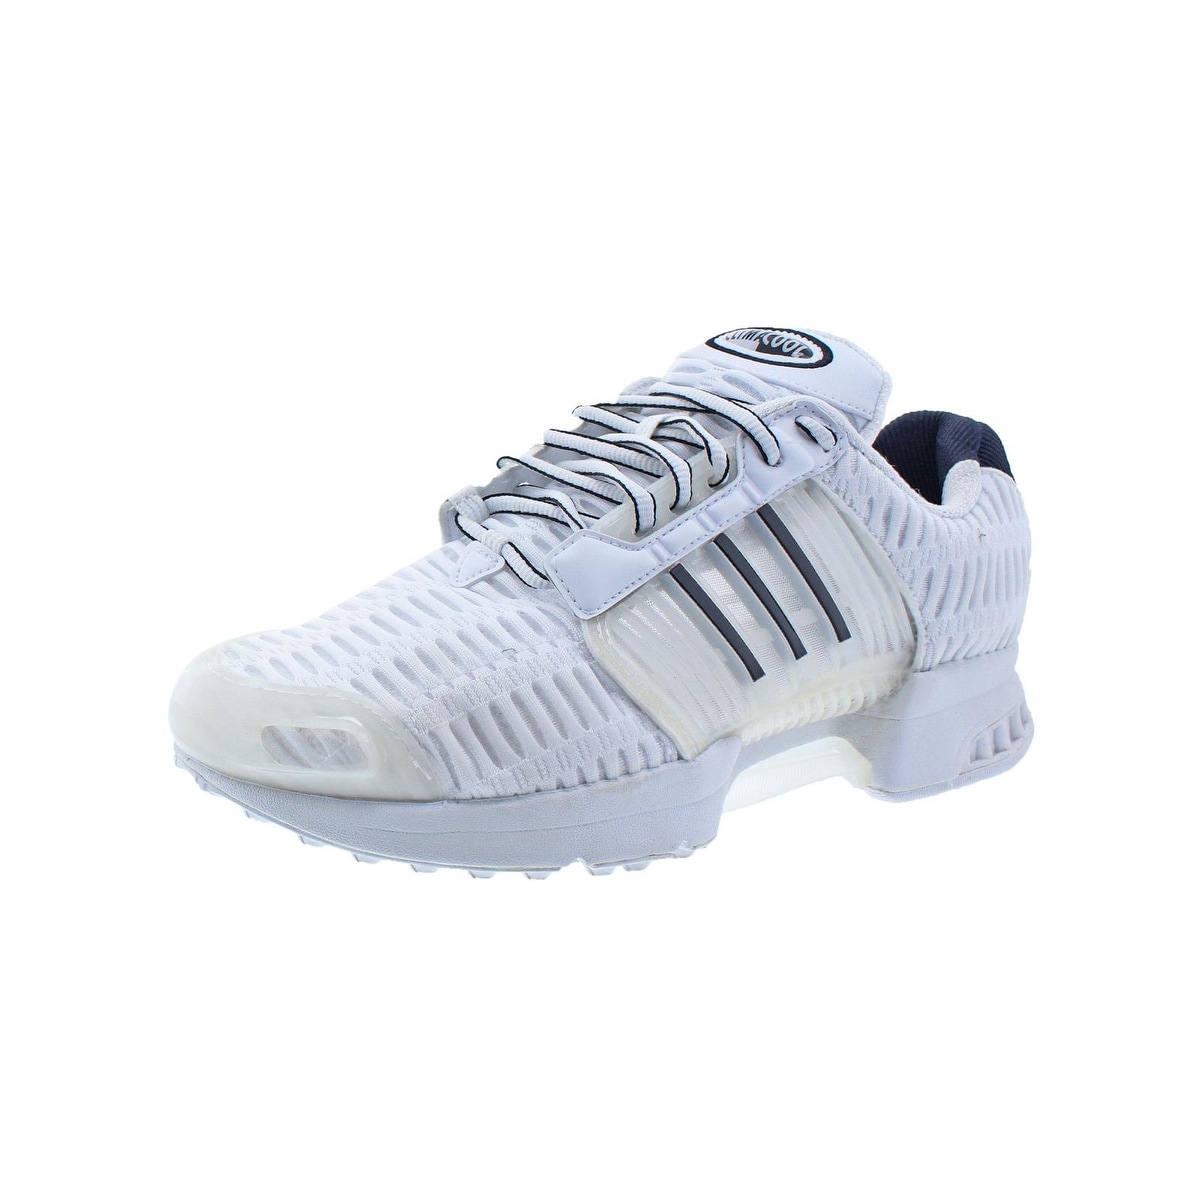 adidas climacool adiprene running shoes